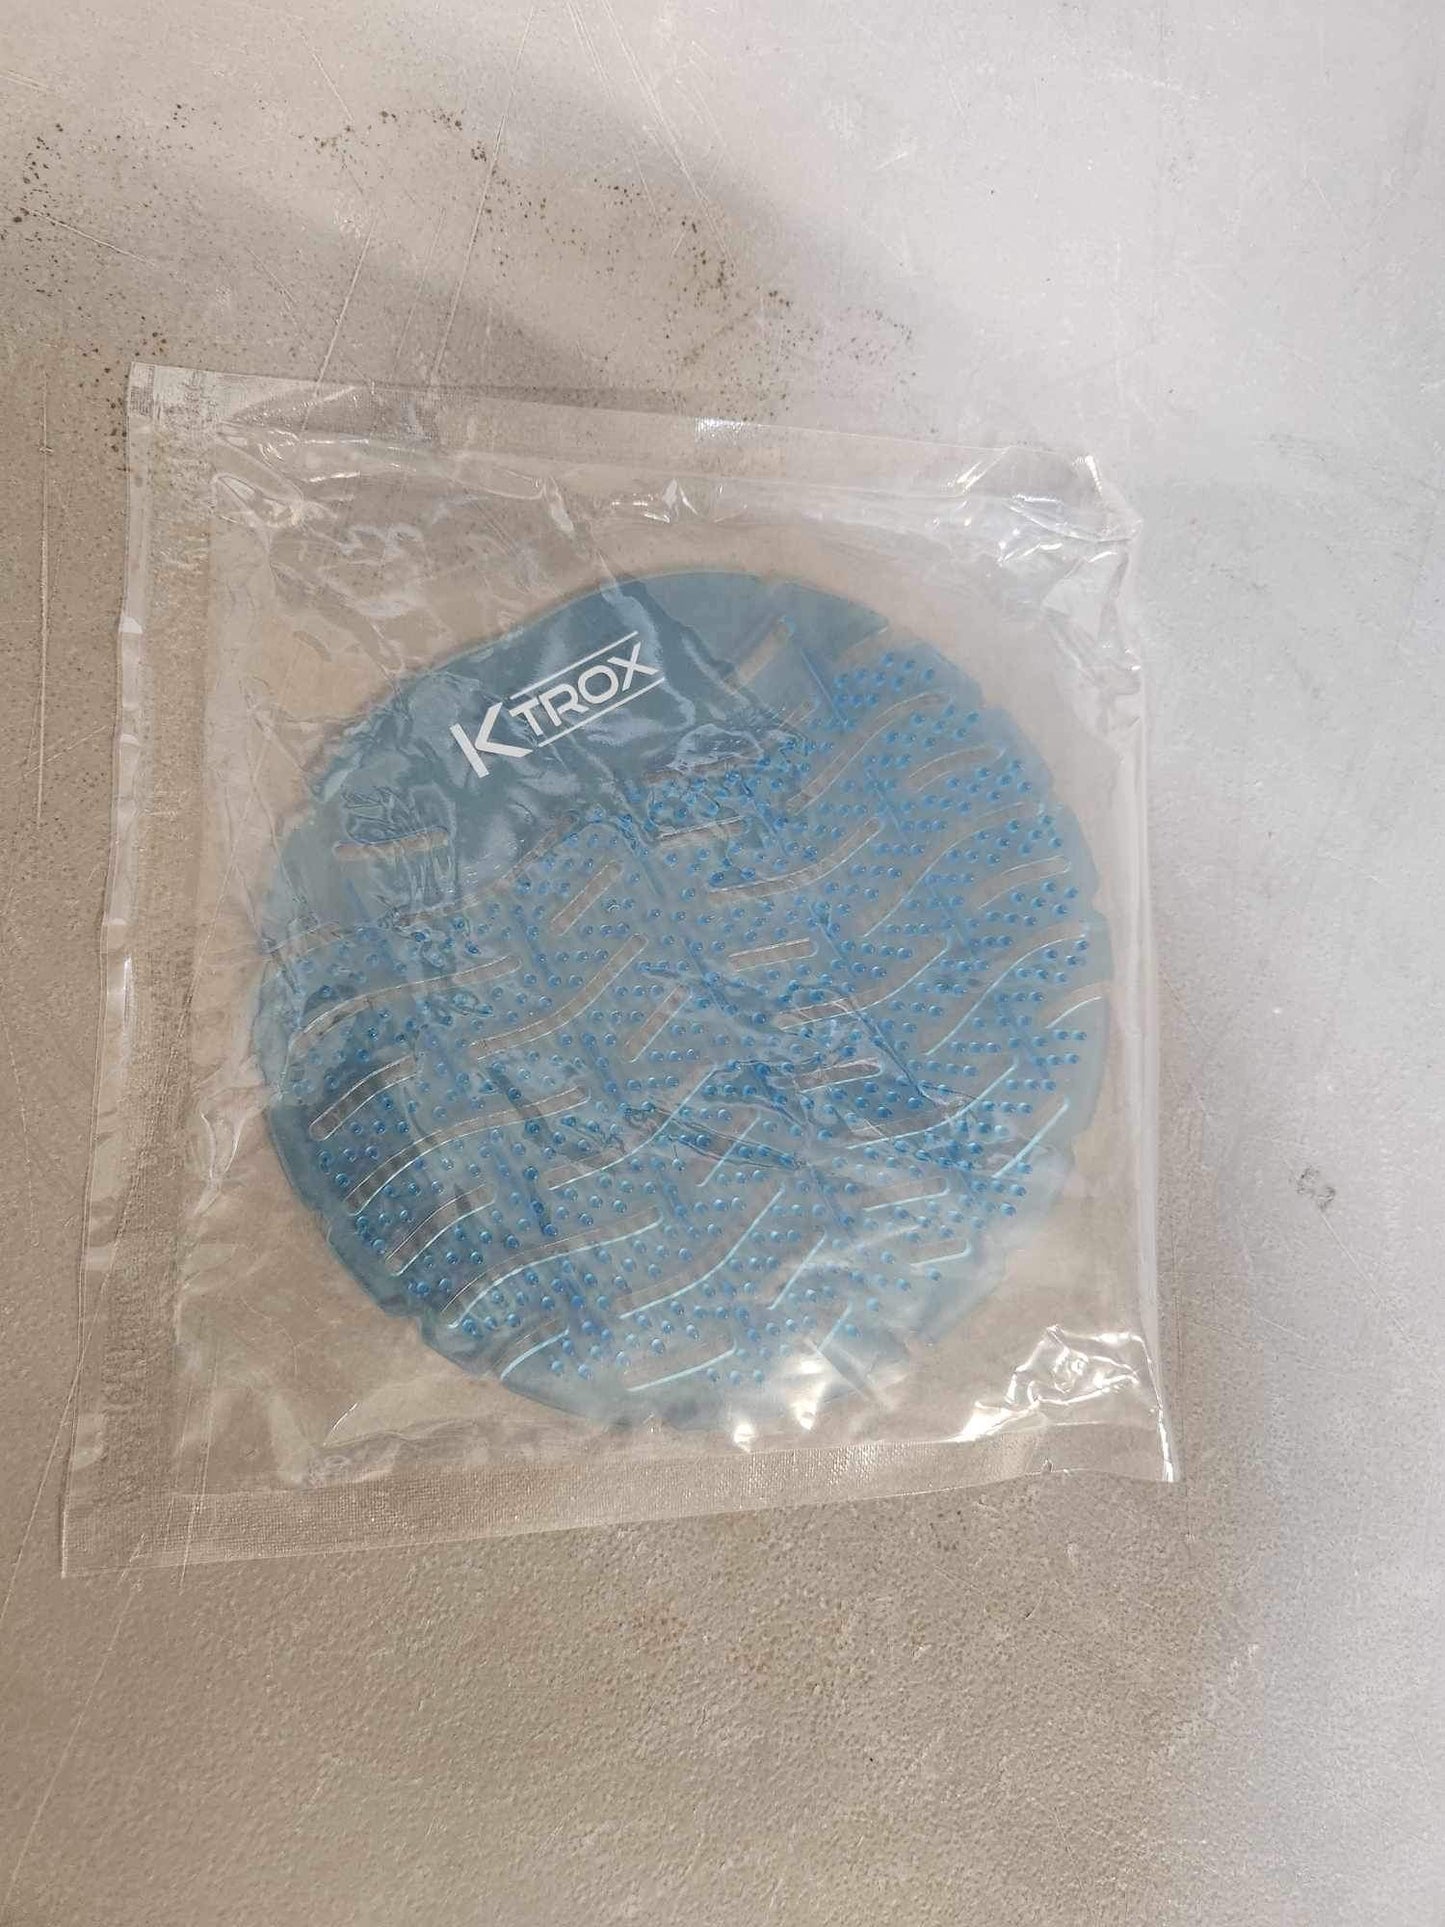 K-Trox Urinal Screen Deodorizer (10 Pack) Anti-Splash Odor Protection for Toilets in Bathroom Office Stadiums Restaurants Schools- Blue Ocean Breeze Scent